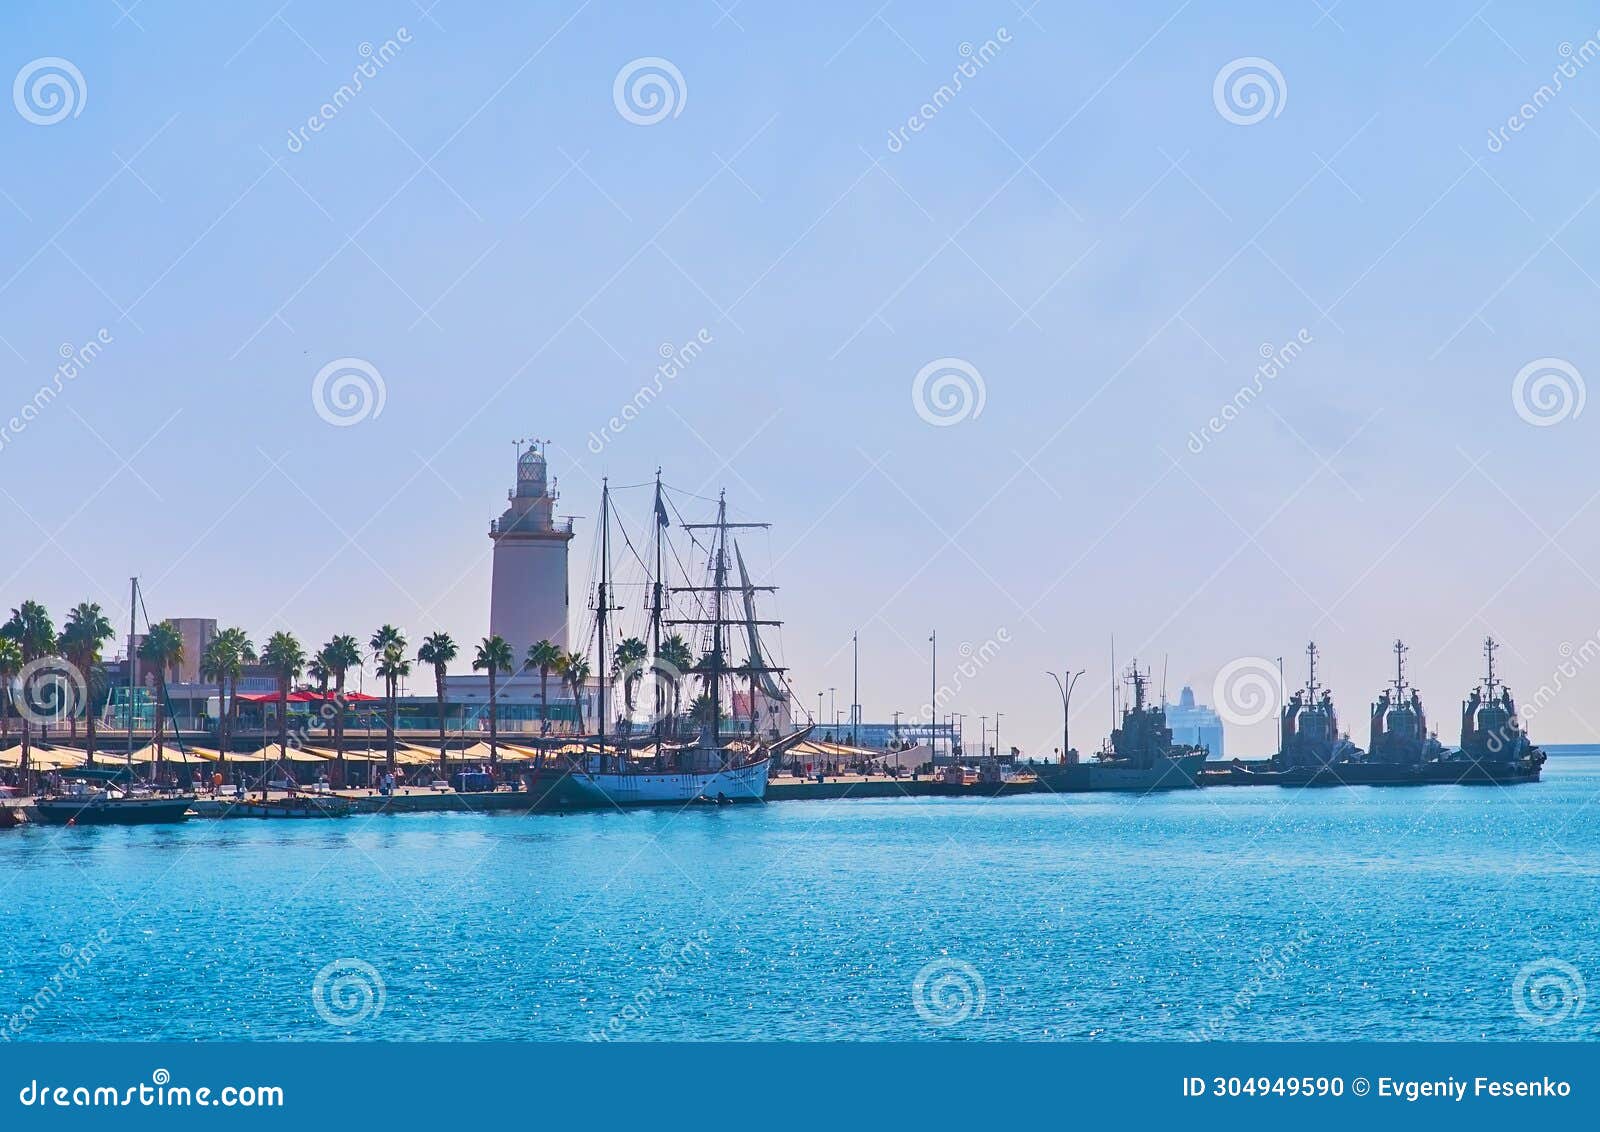 muelle uno and la farola lighthouse, malaga port, spain